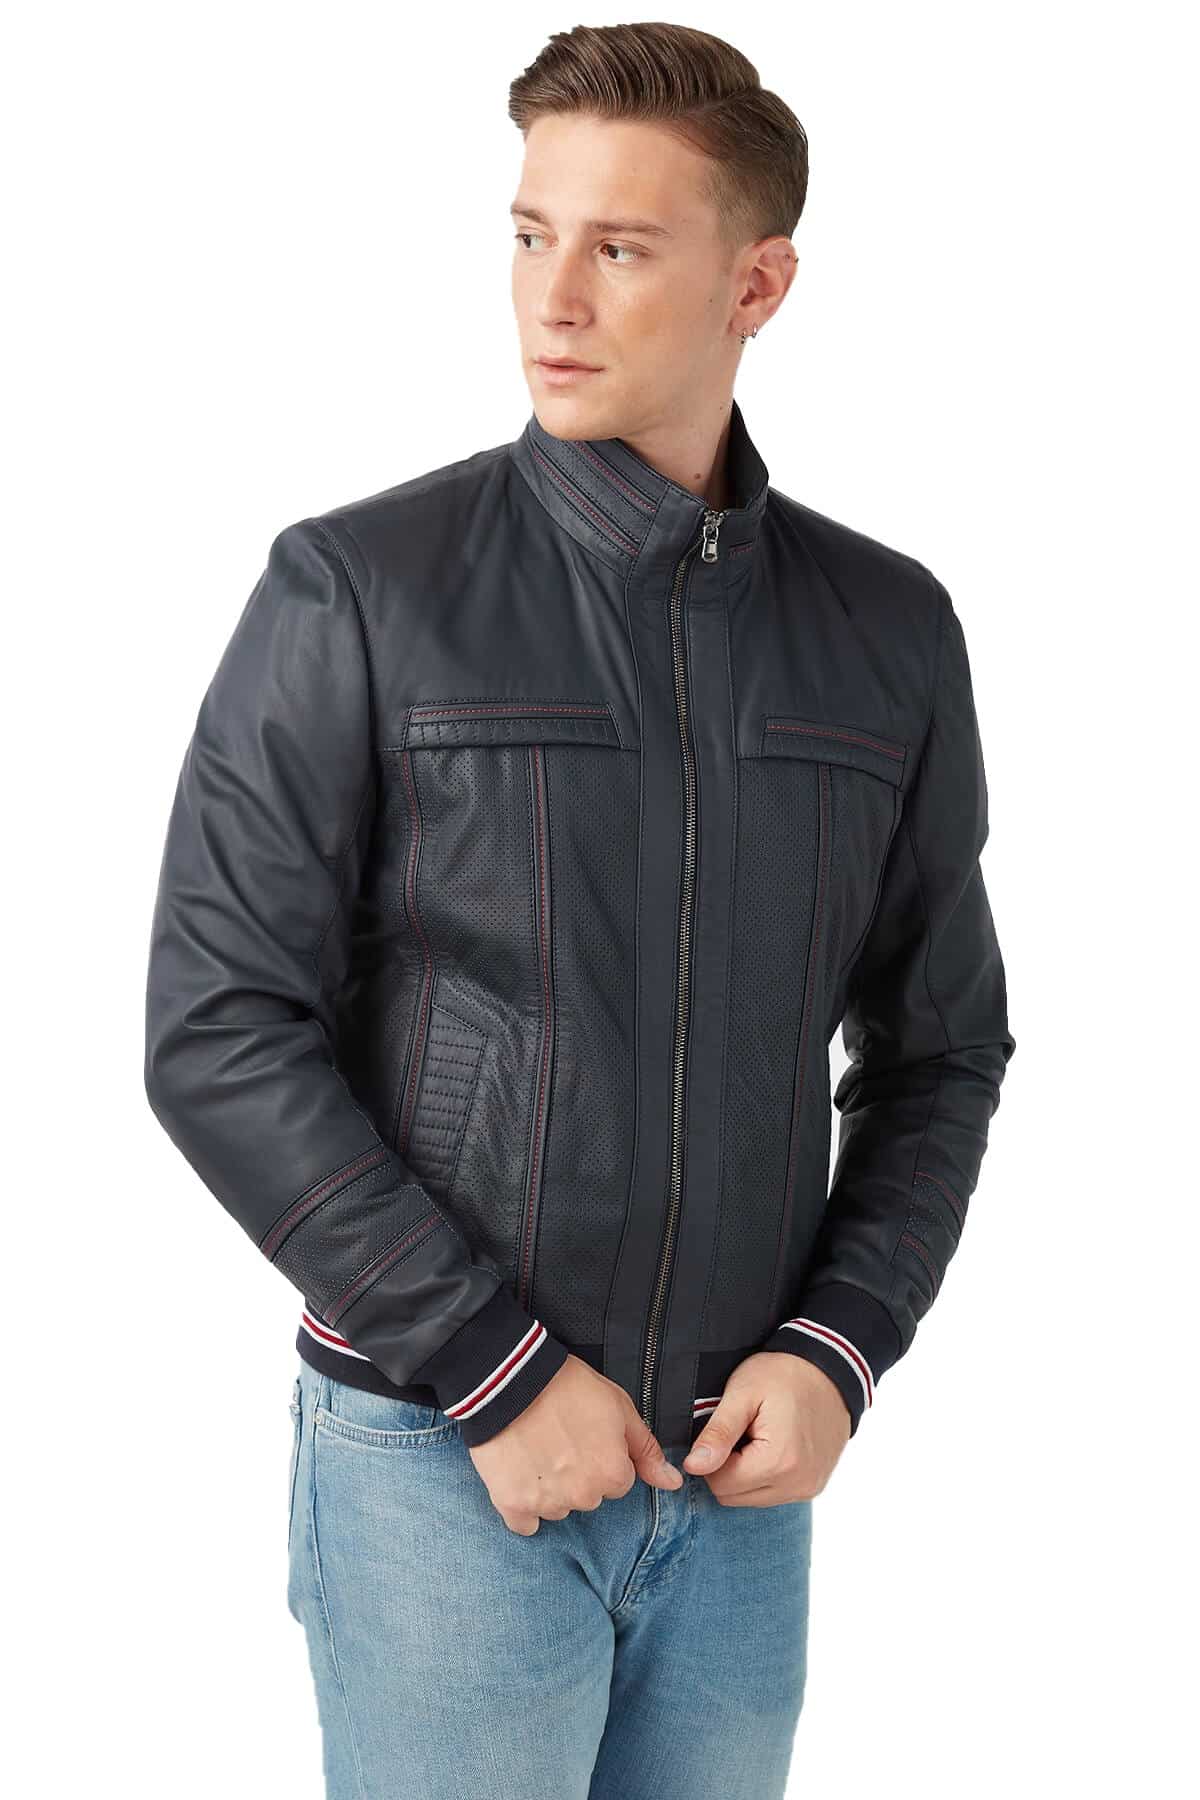 Wilfred Men's 100 % Real Navy-Blue Leather Taffeta Garnished Jacket